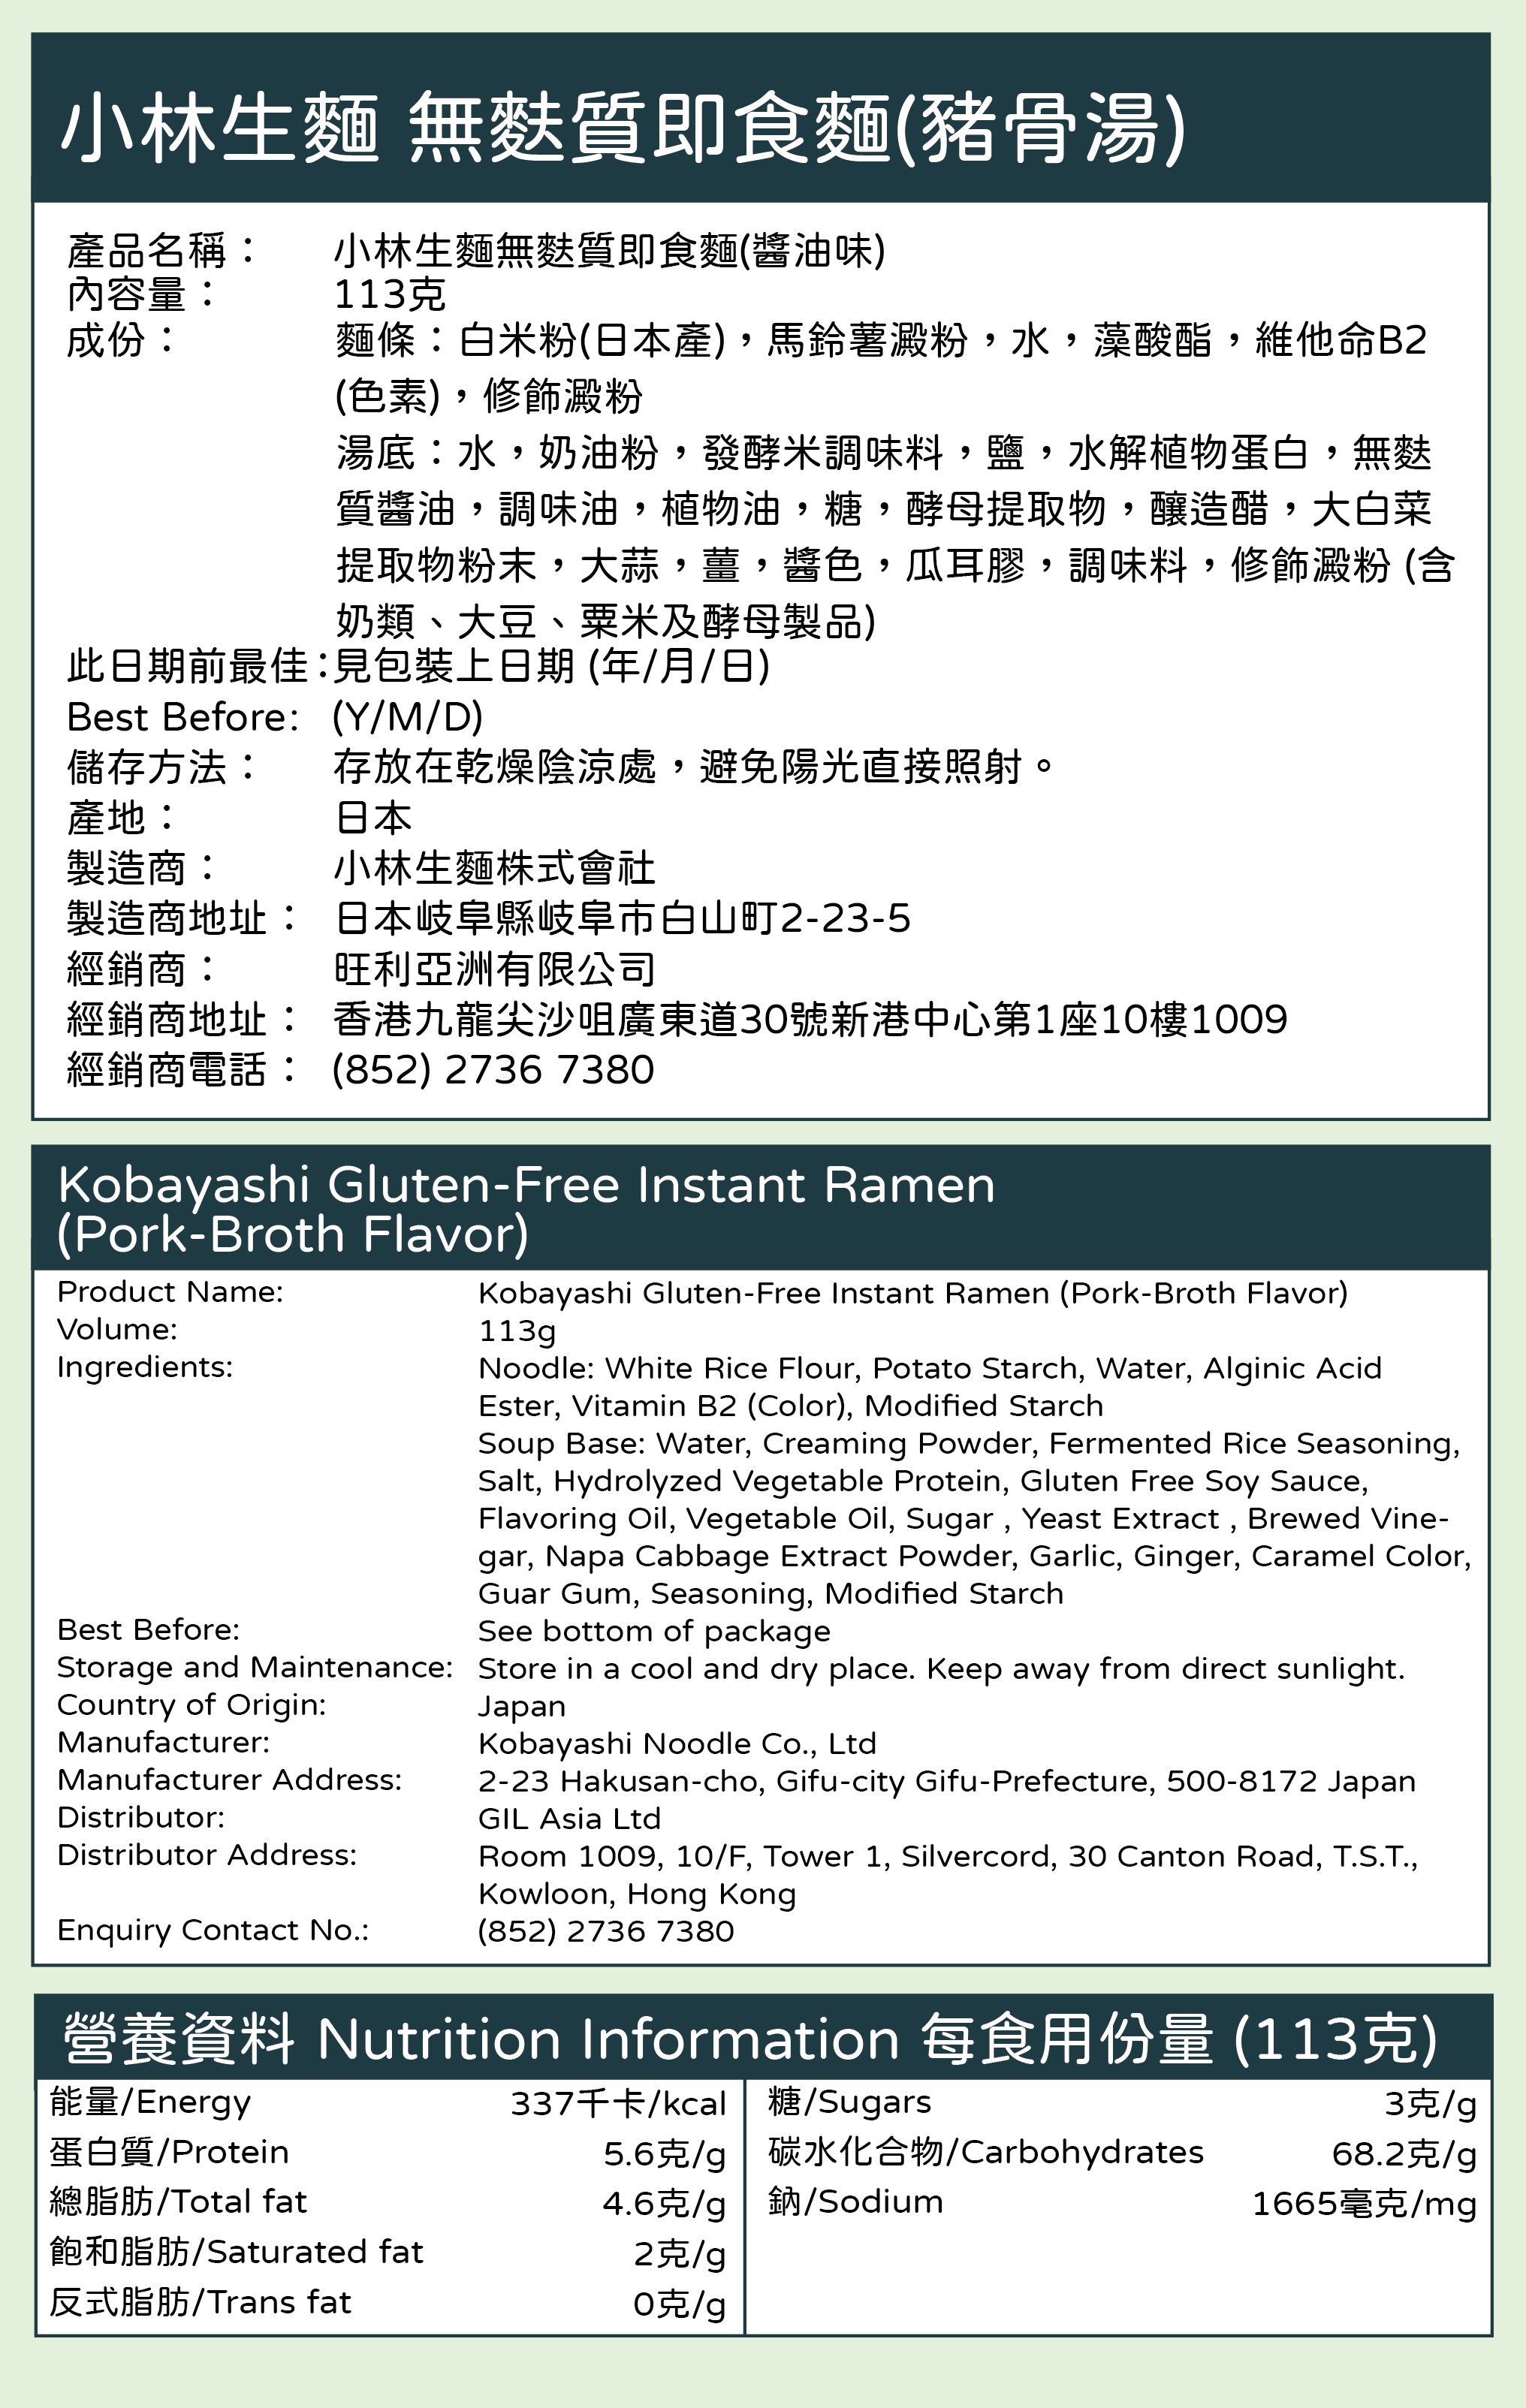 Kobayashi Gluten-Free Instant Ramen (Pork-Broth Flavor)[113g]